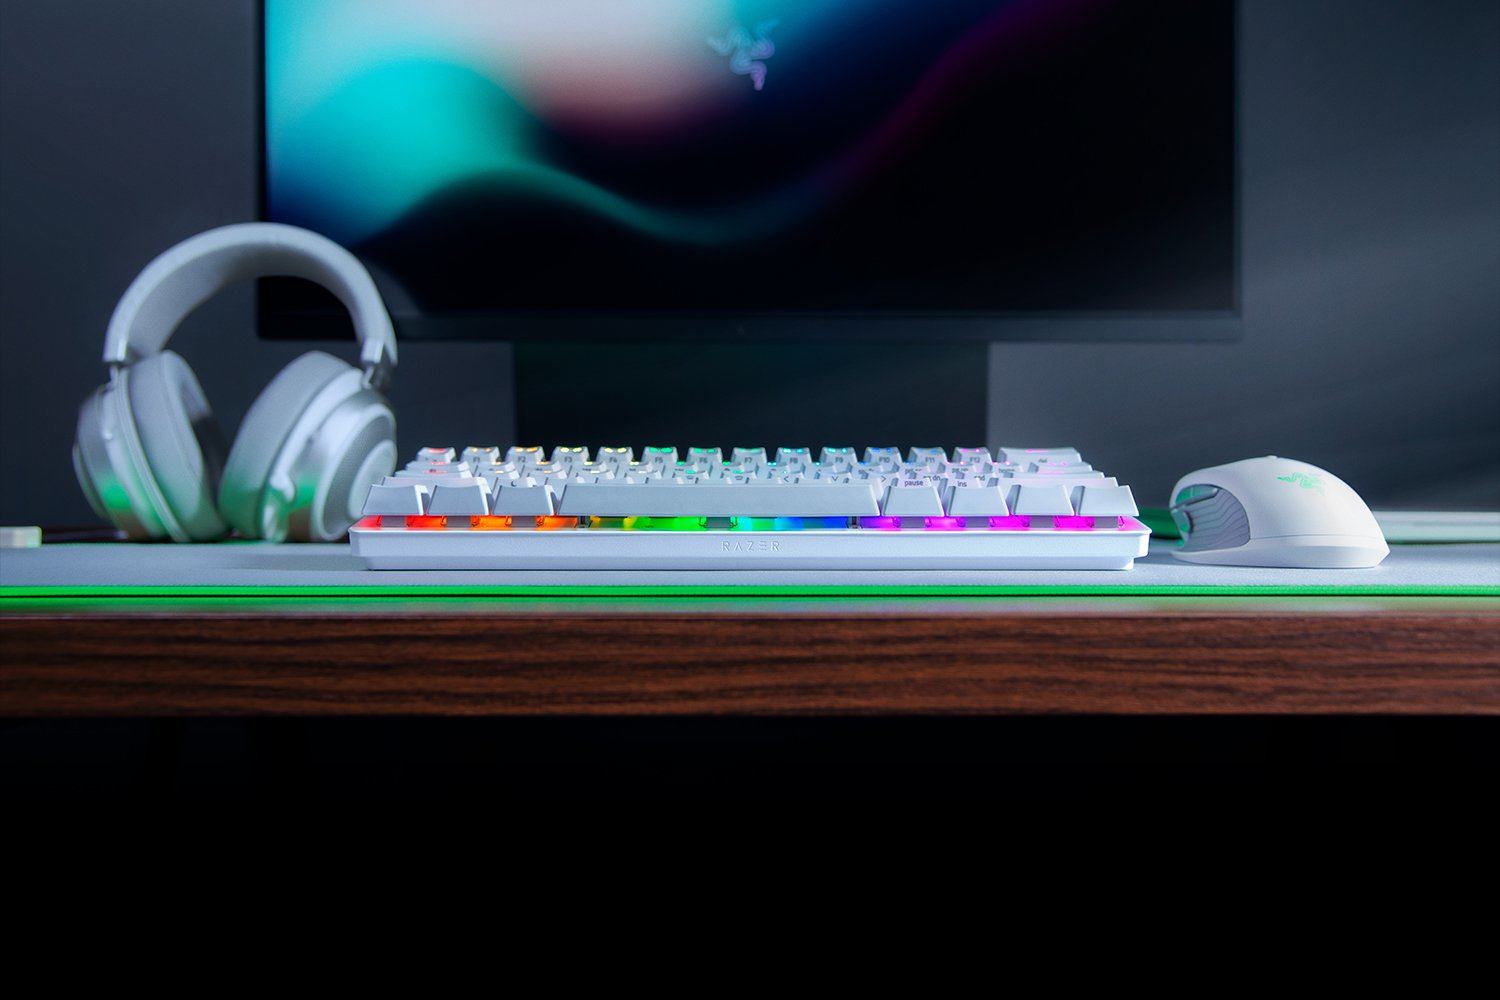 Razer Huntsman Mini Gaming Keyboard Optical Purple Switches Chroma RGB DE-Layout